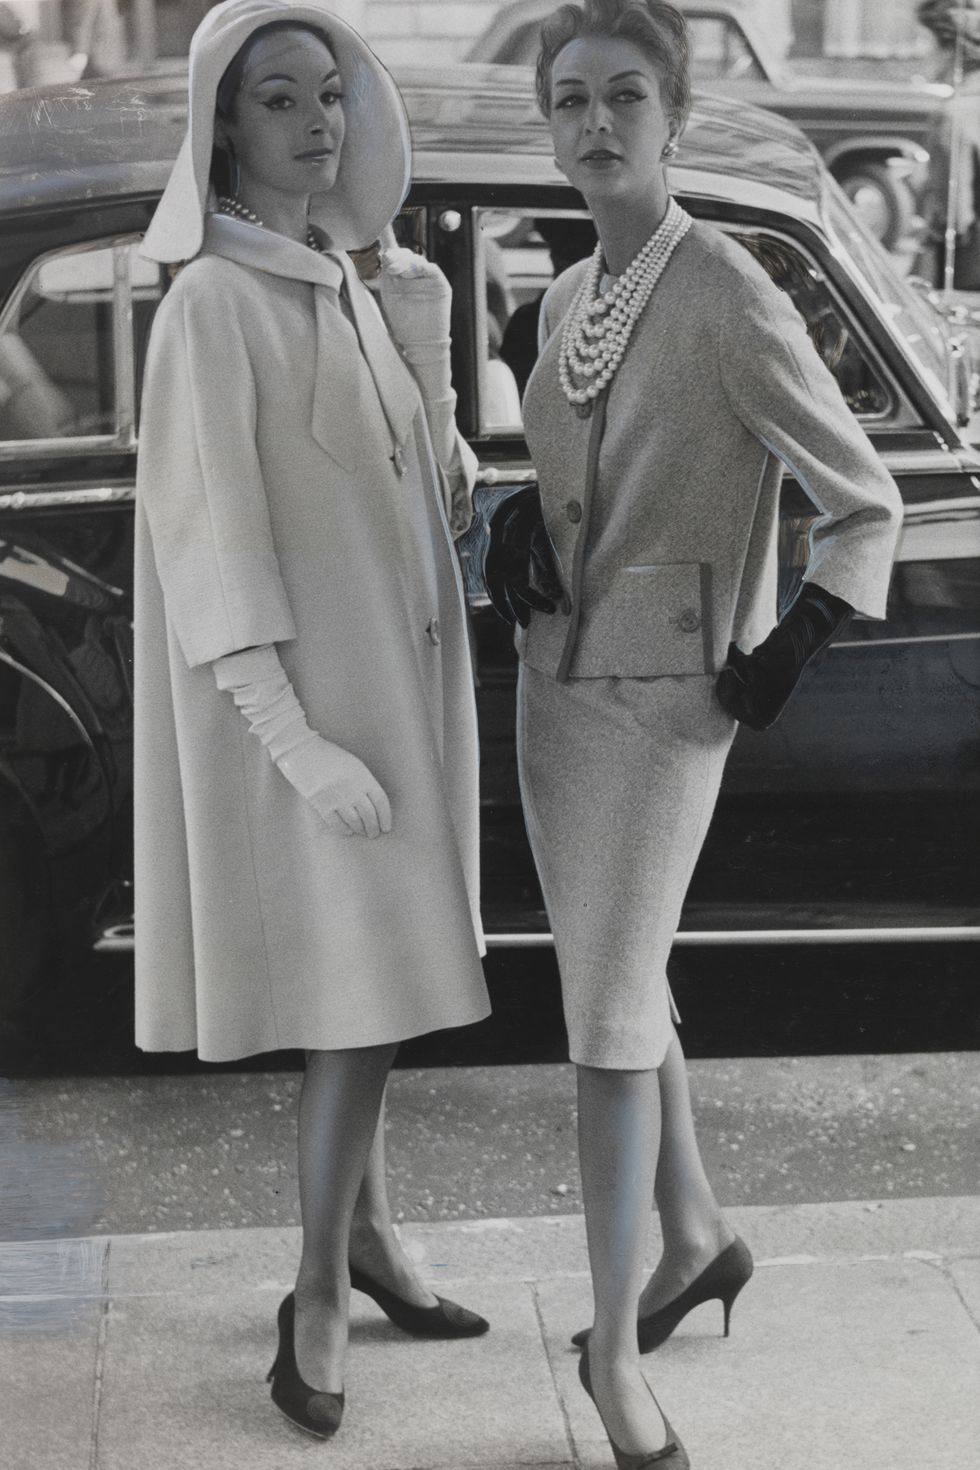 Majer Slacks 1960s Vintage Pants: Late 60s -Majer Slacks- Mens